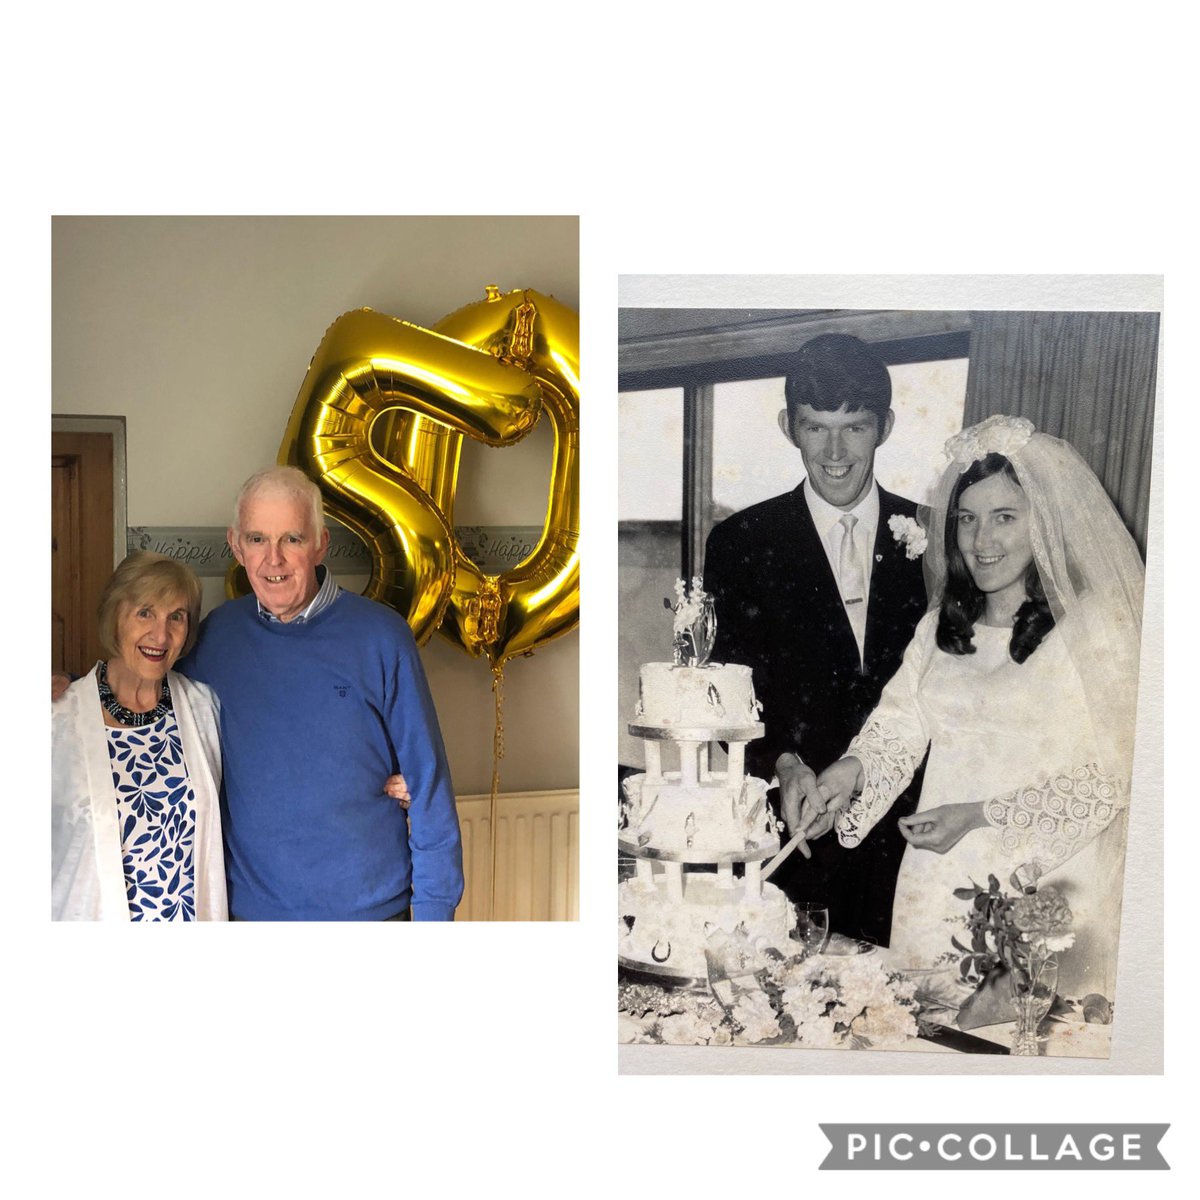 Michael & Phyllis Fennin est 17/6/70 #50years #goldenanniversary #luckyus 💛